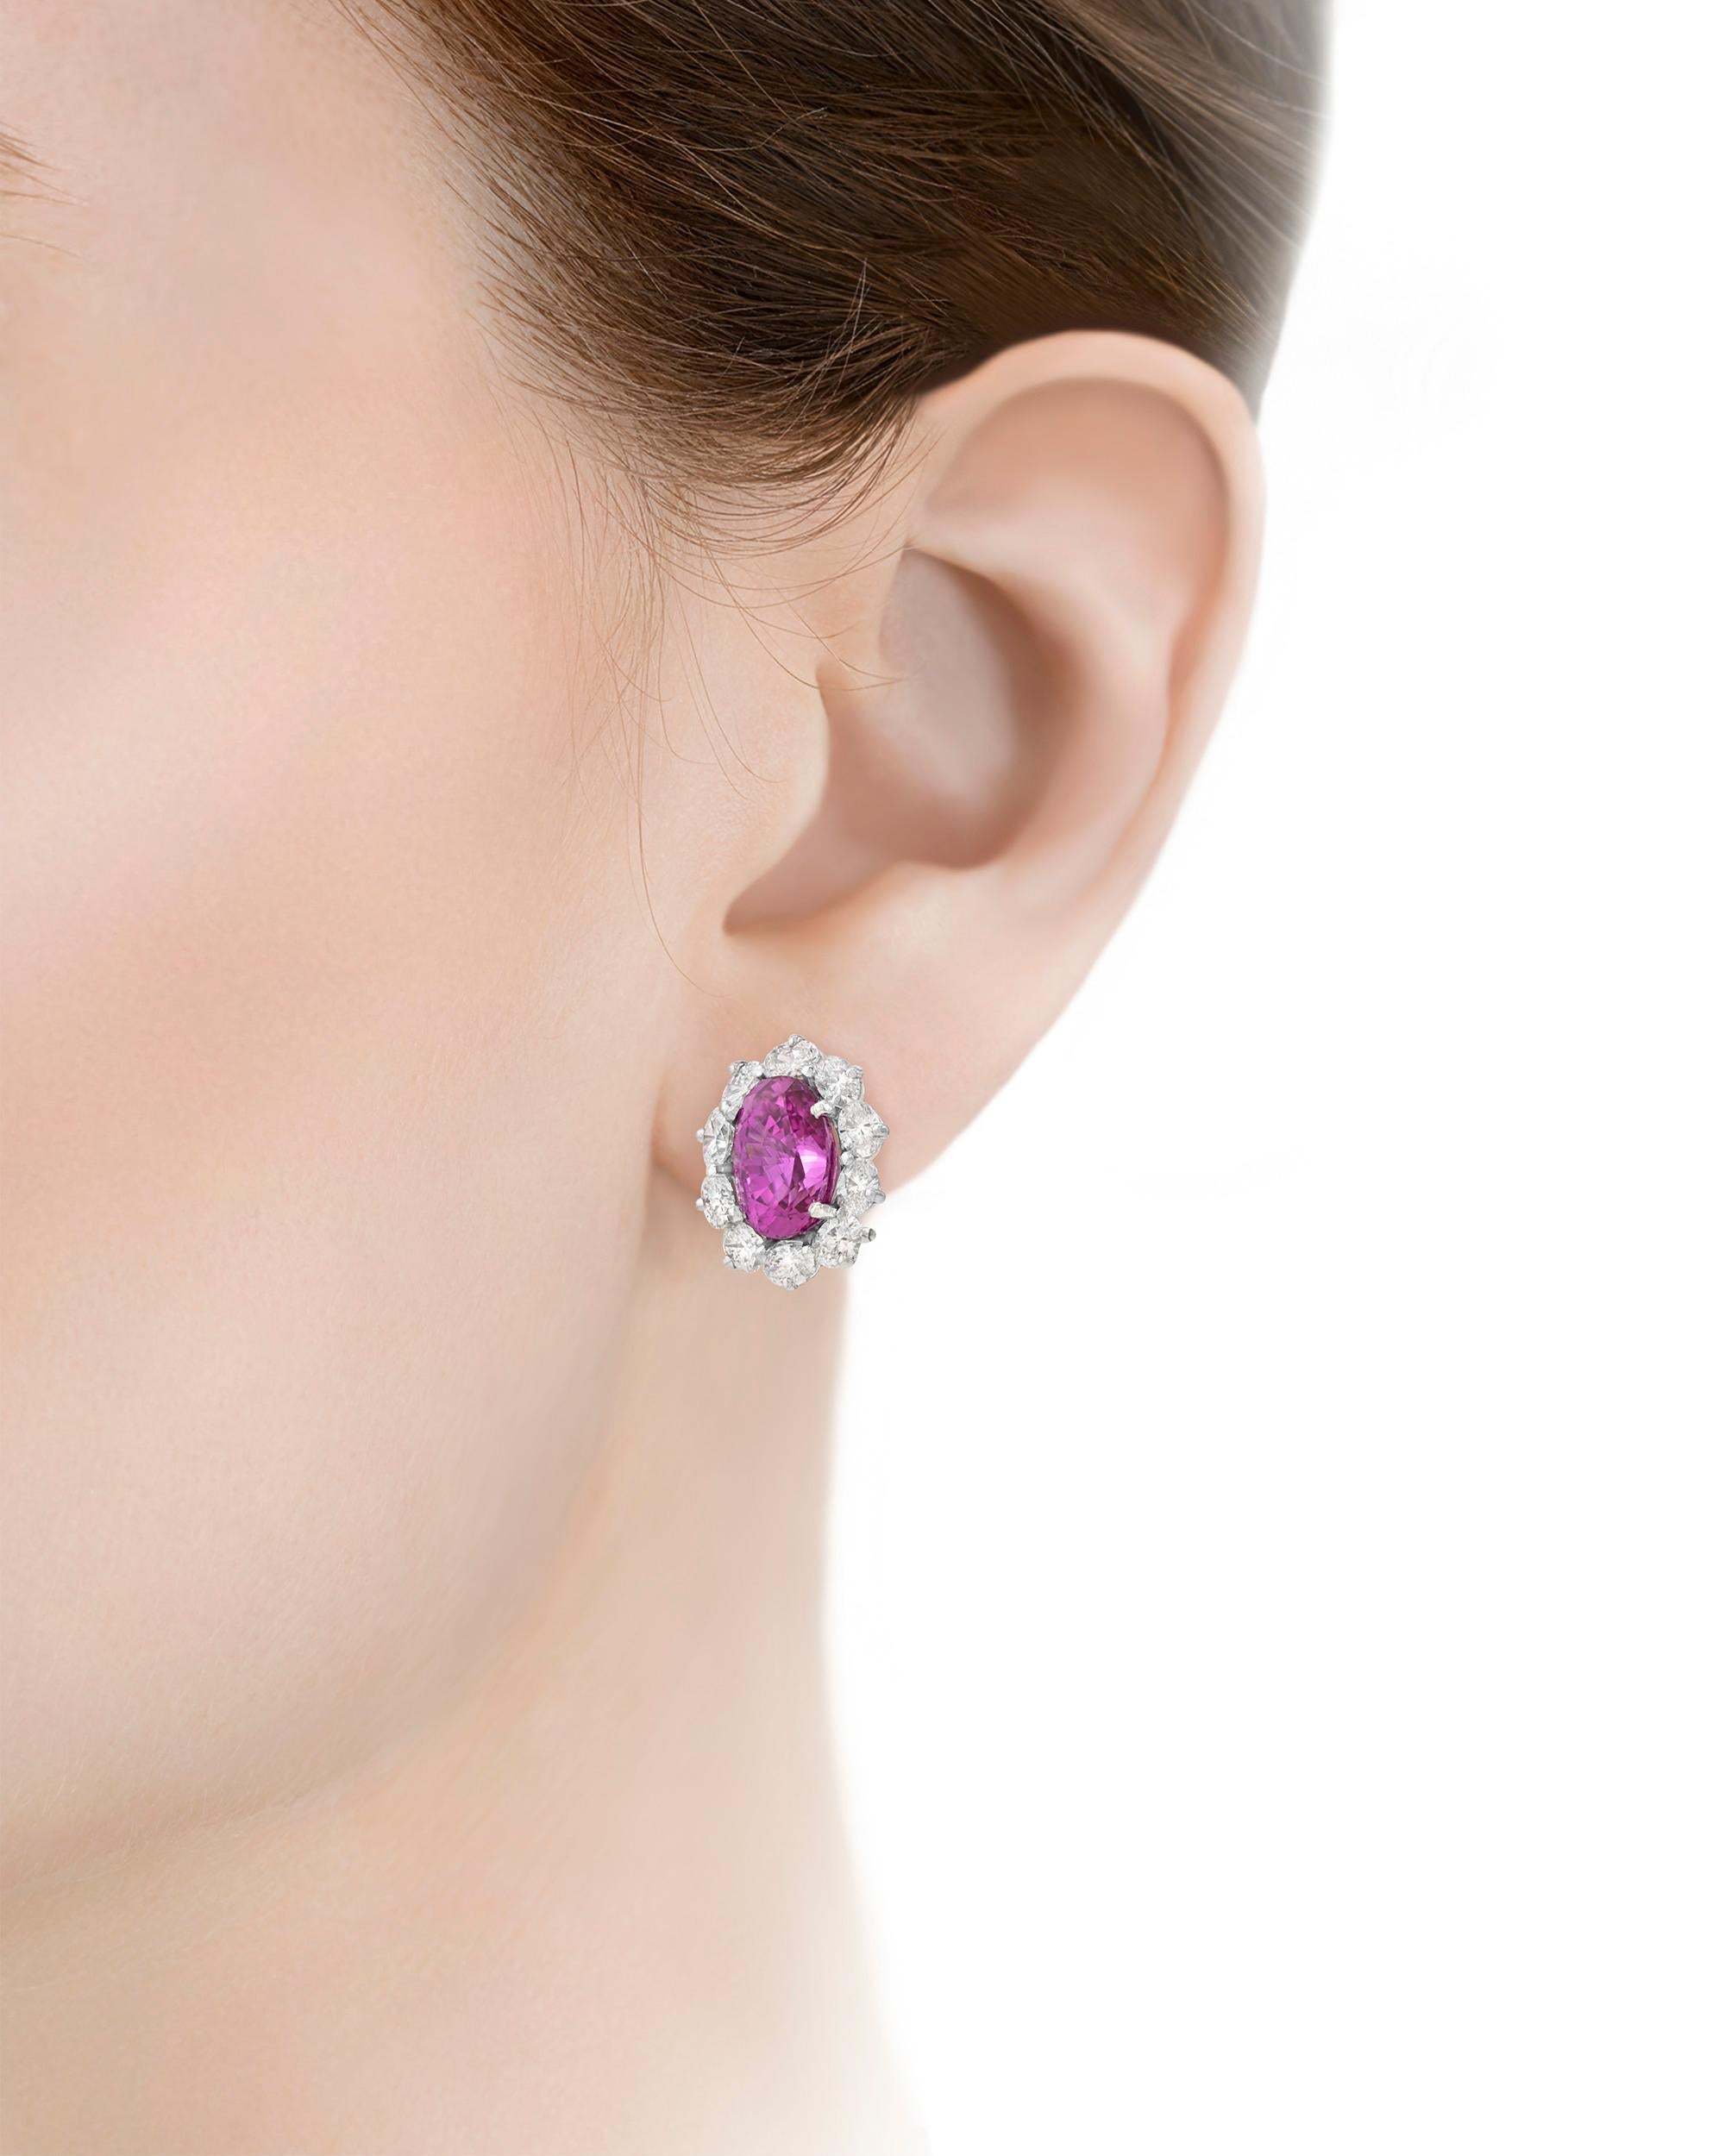 ceylon sapphire earrings